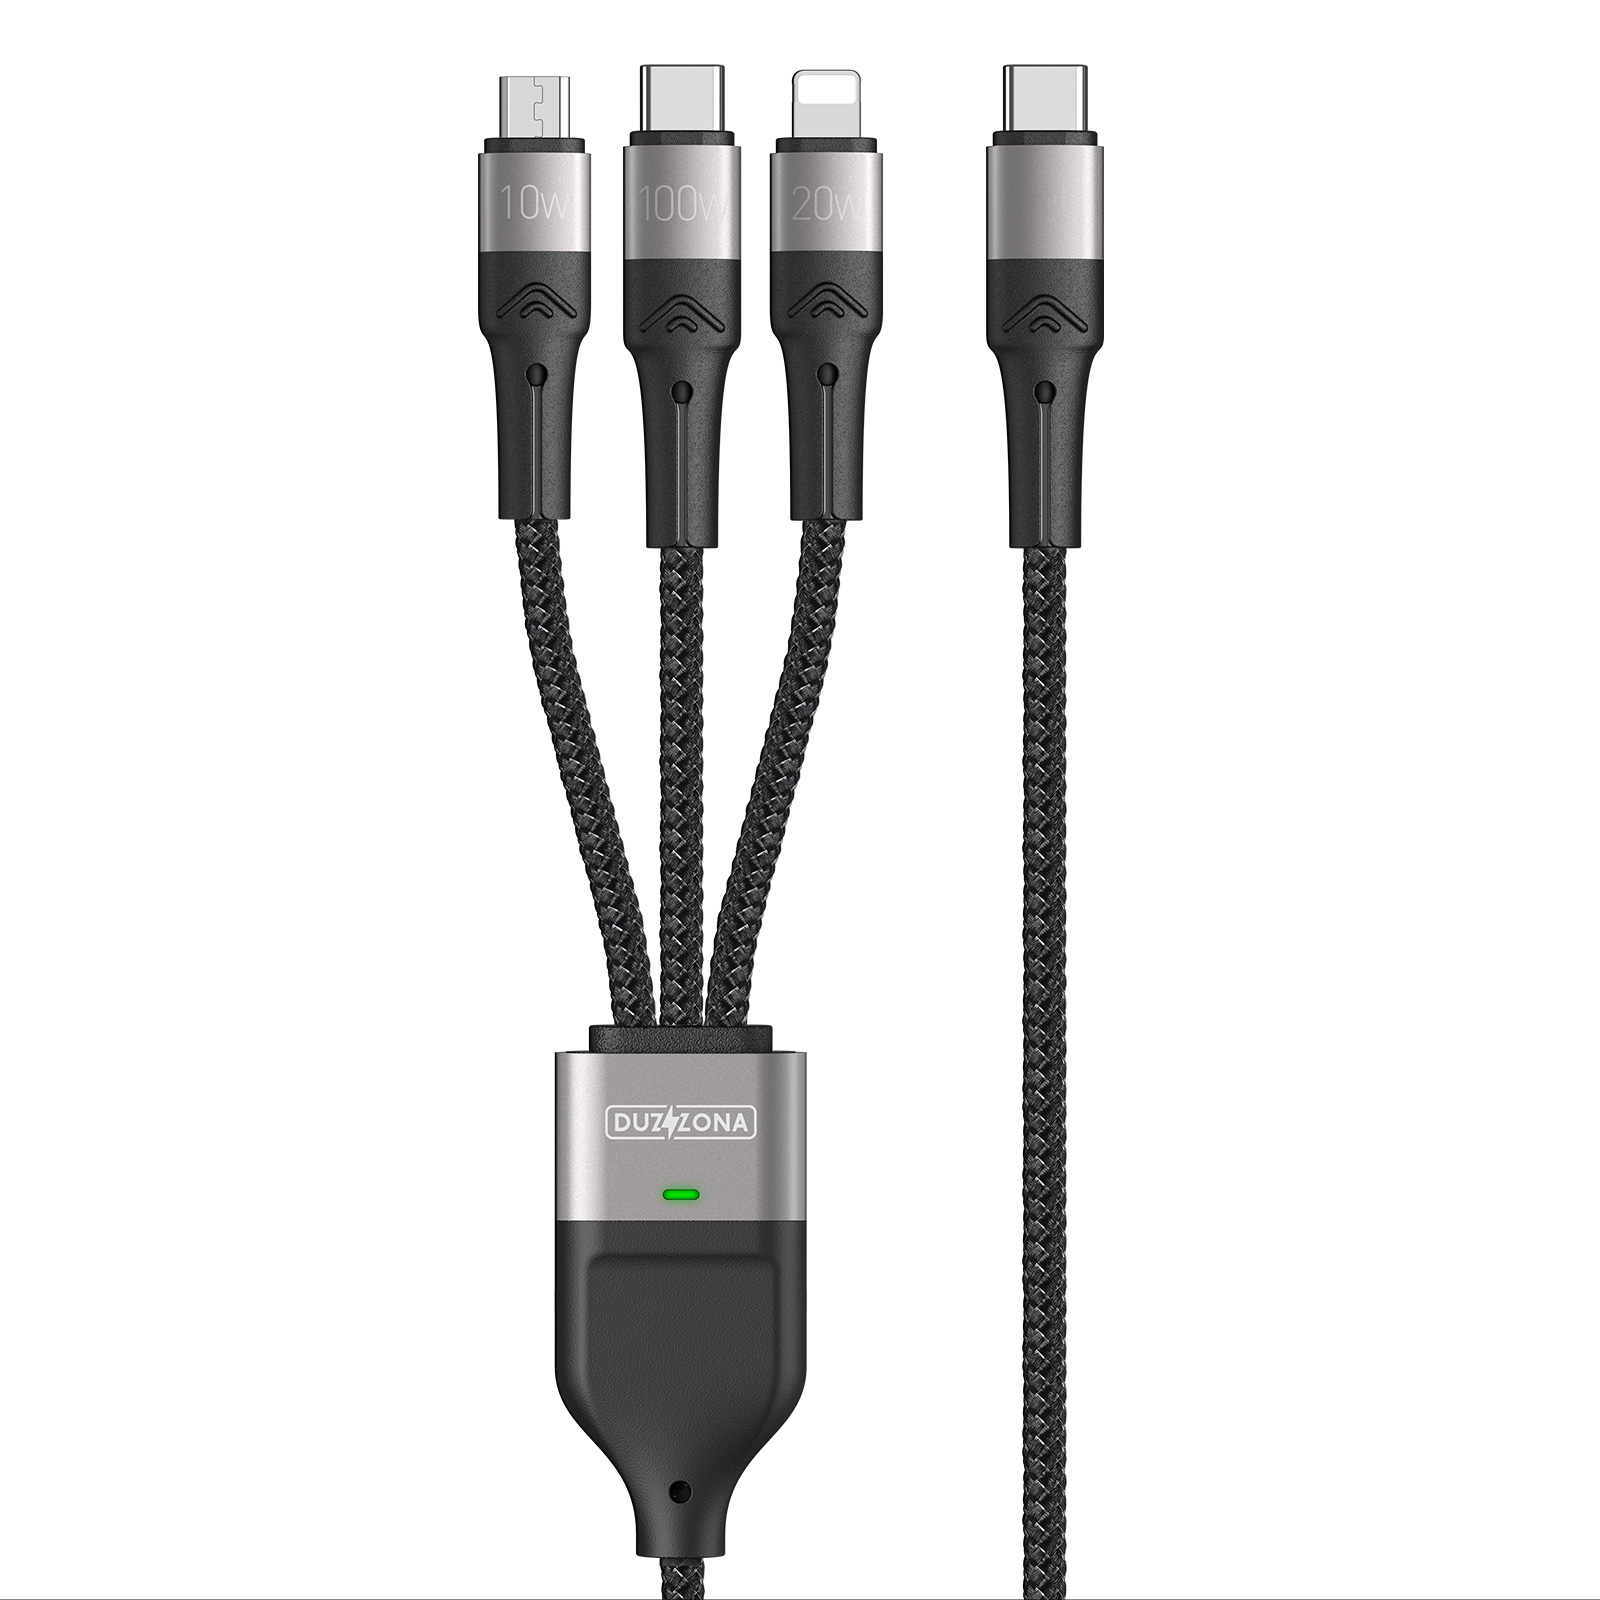 Cable USB 3 en 1 (Lighting) Android / Tipo-C Carga Rápida 2.4 A-2m